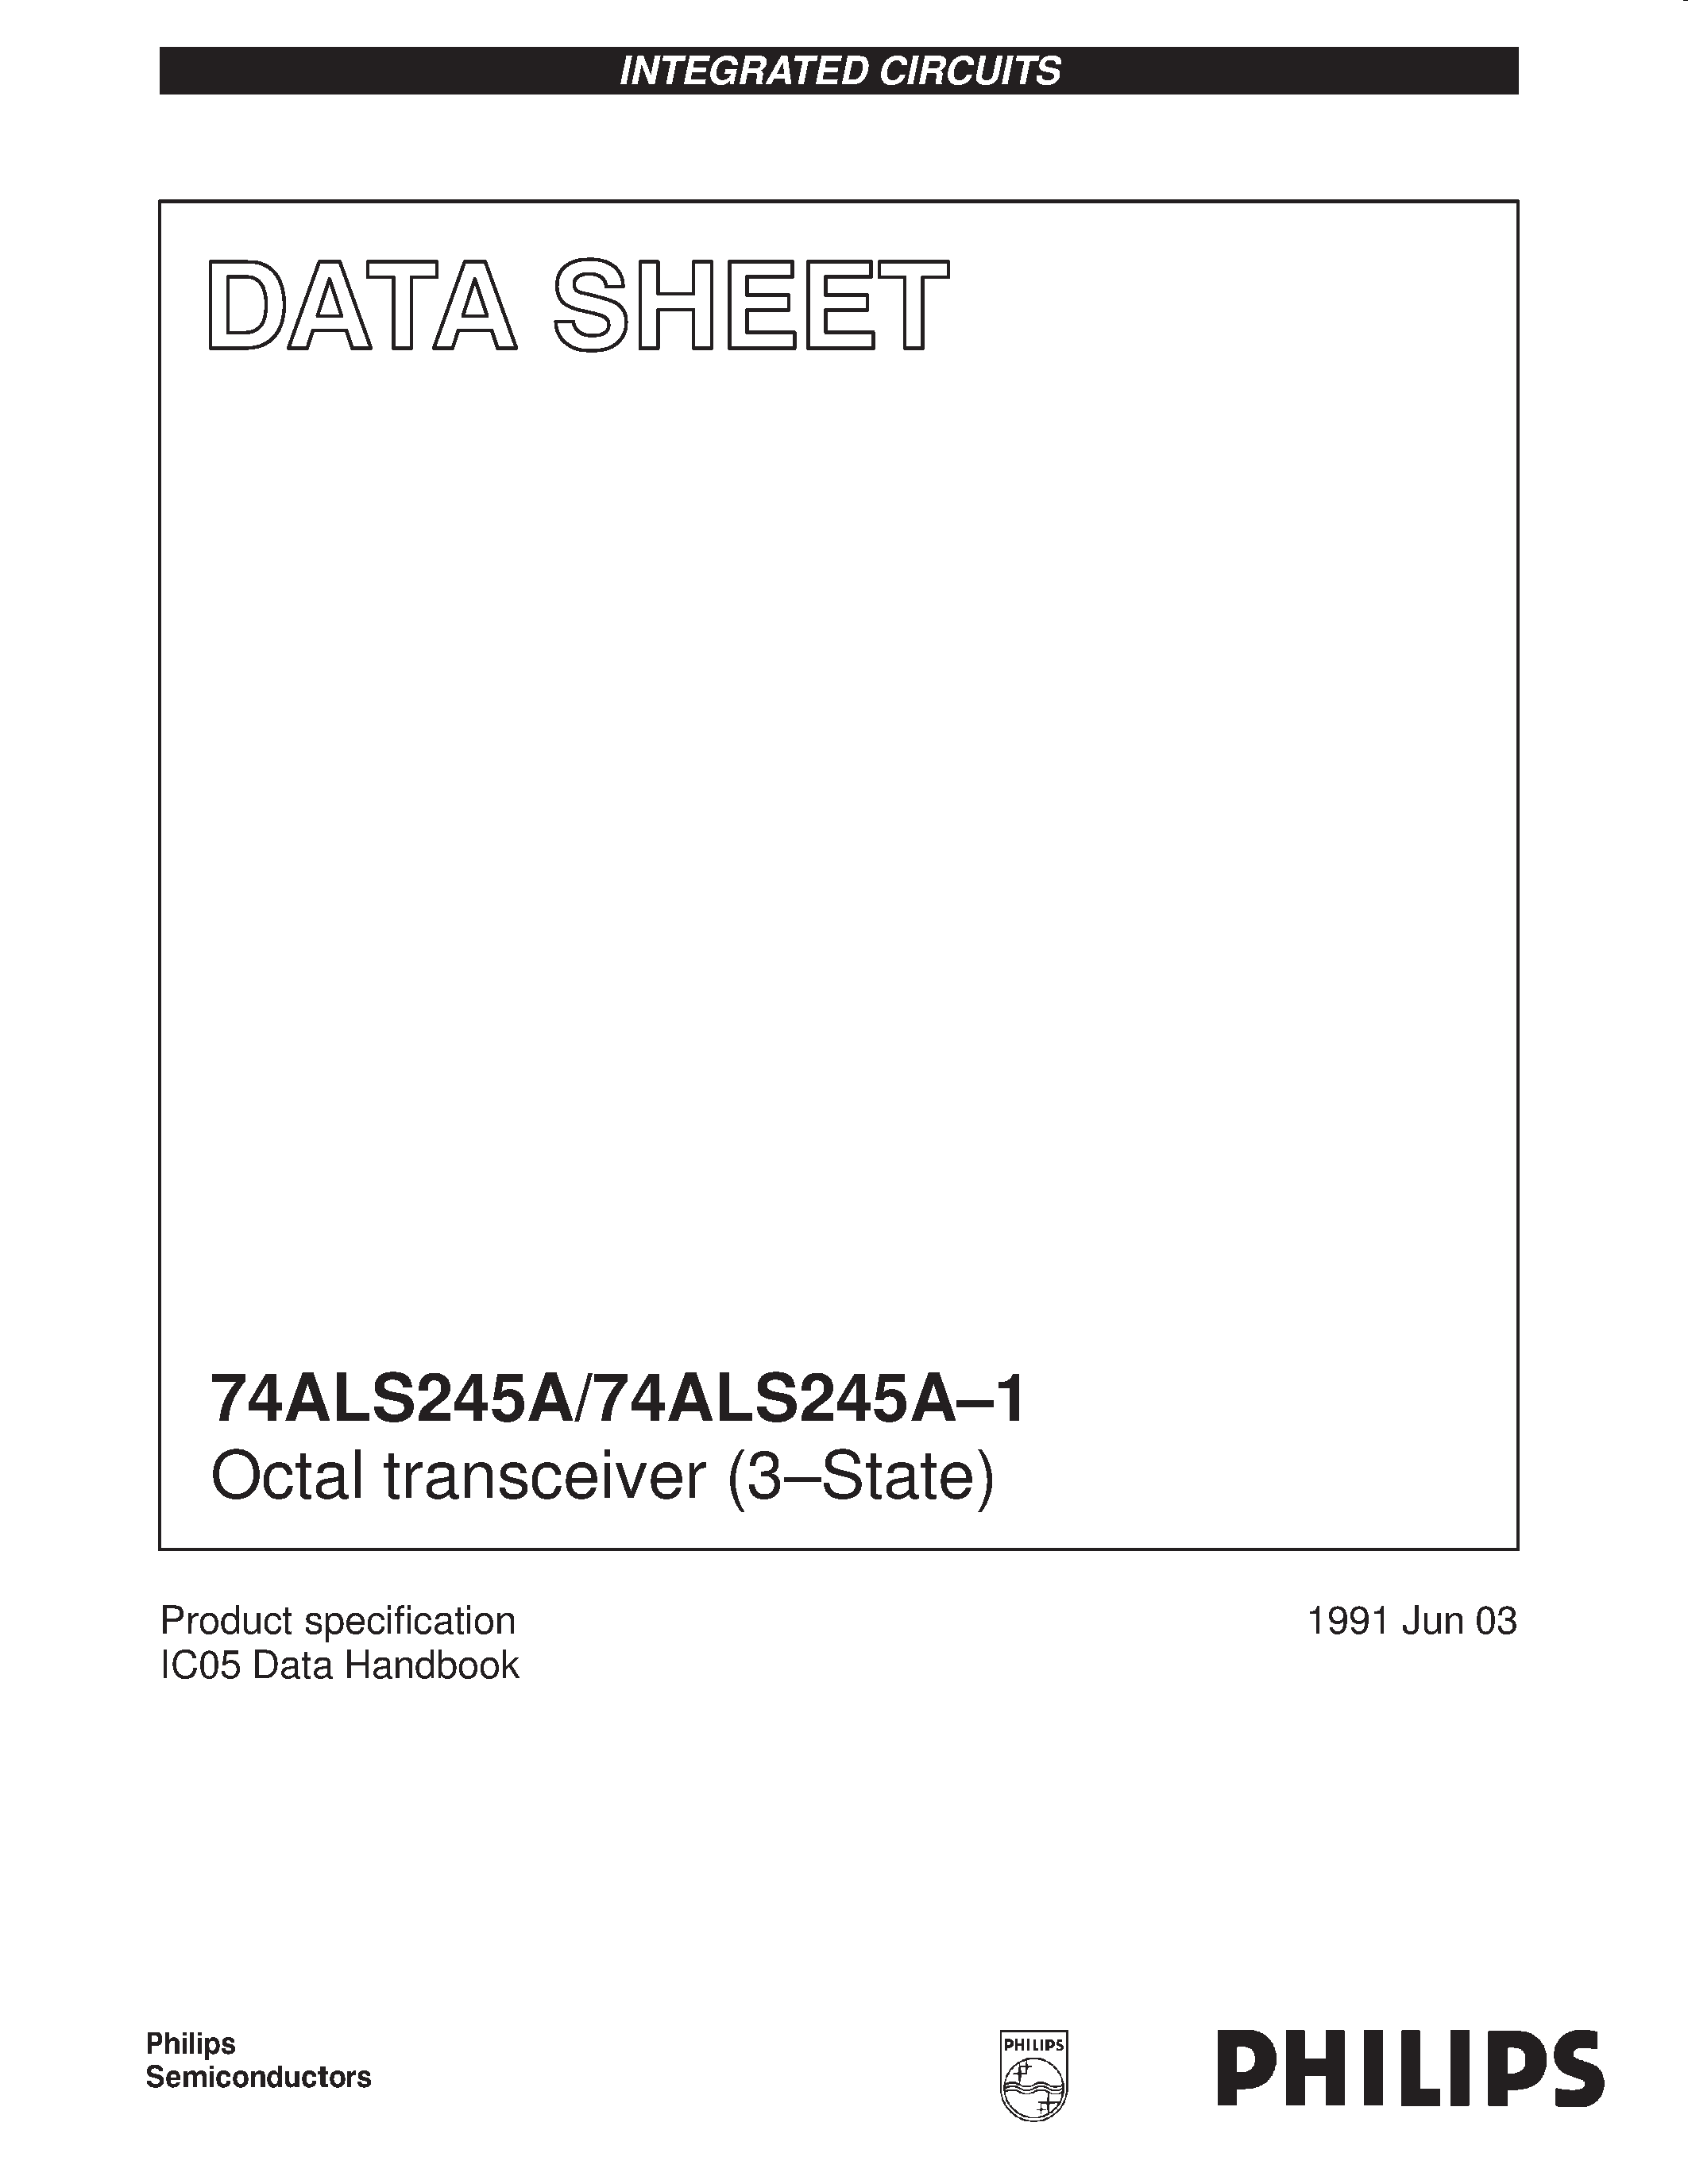 Даташит 744ALS245A-1D-Octal transceiver 3-State страница 1